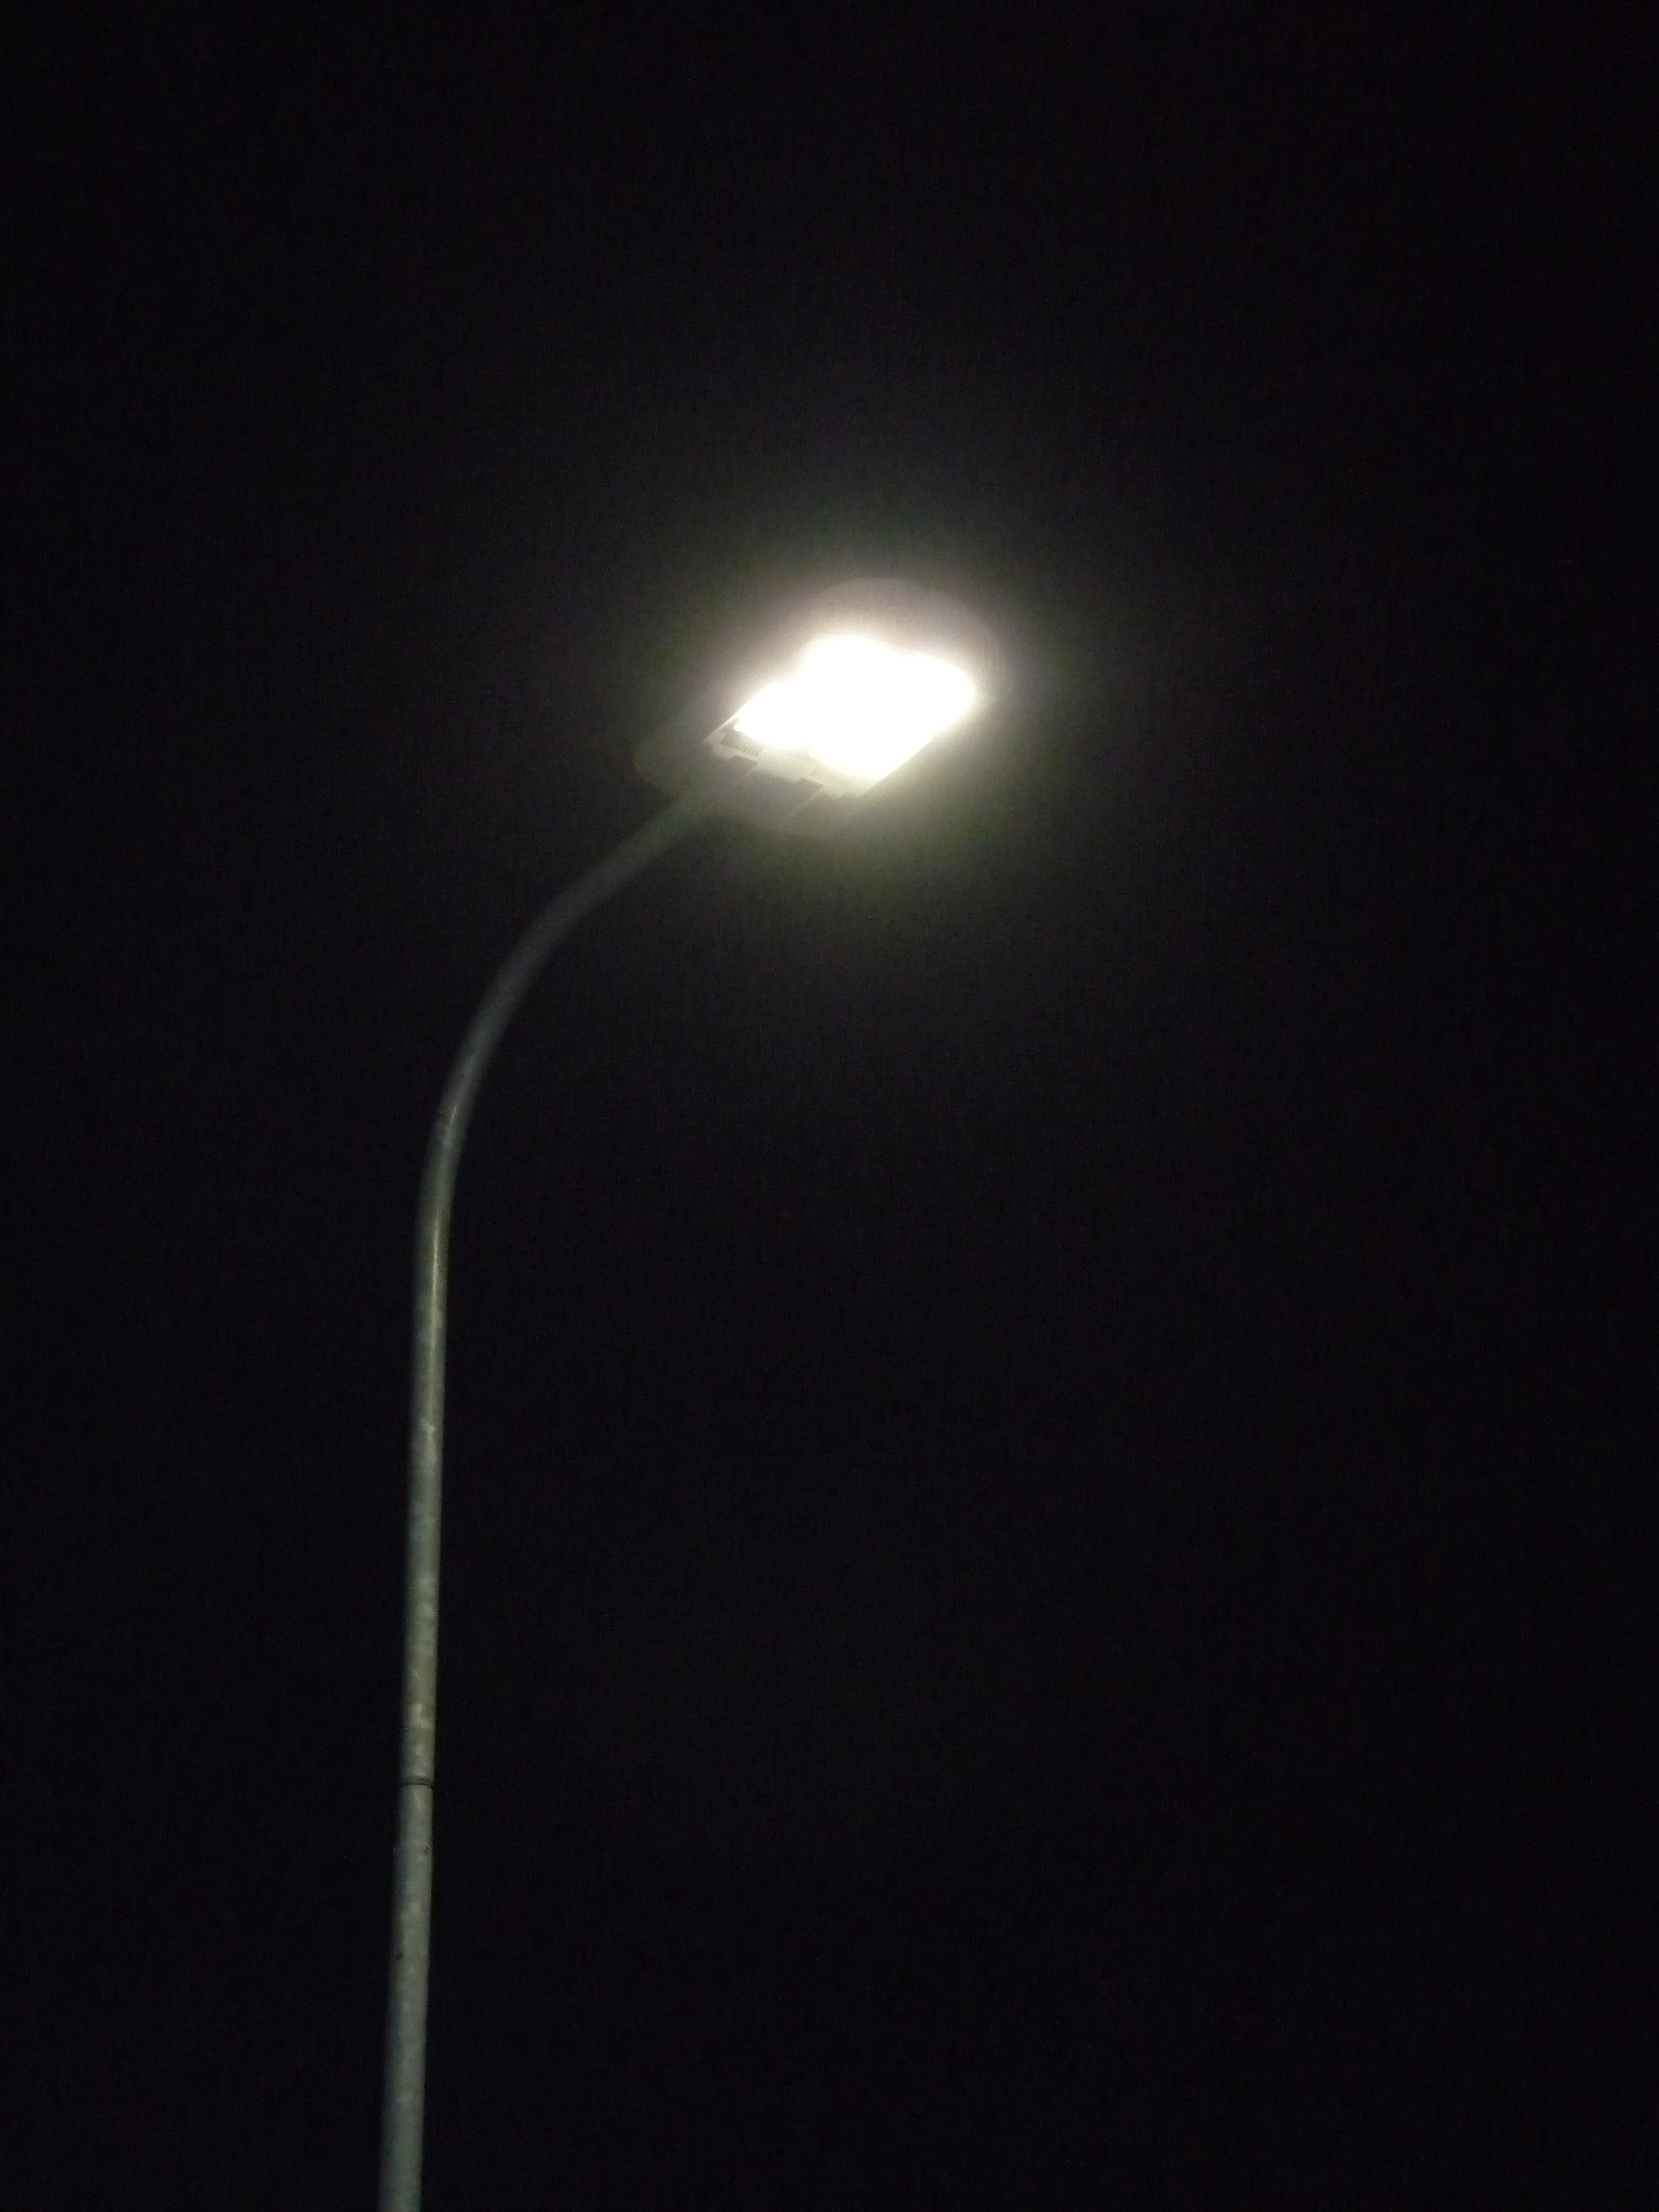 LED streetlight in Talinn, Estonia. LEDs tend to emit cooler, whitish light than fluorescent or incandescent bulbs. Image courtesy of Wikimedia.org user Dmitry G.